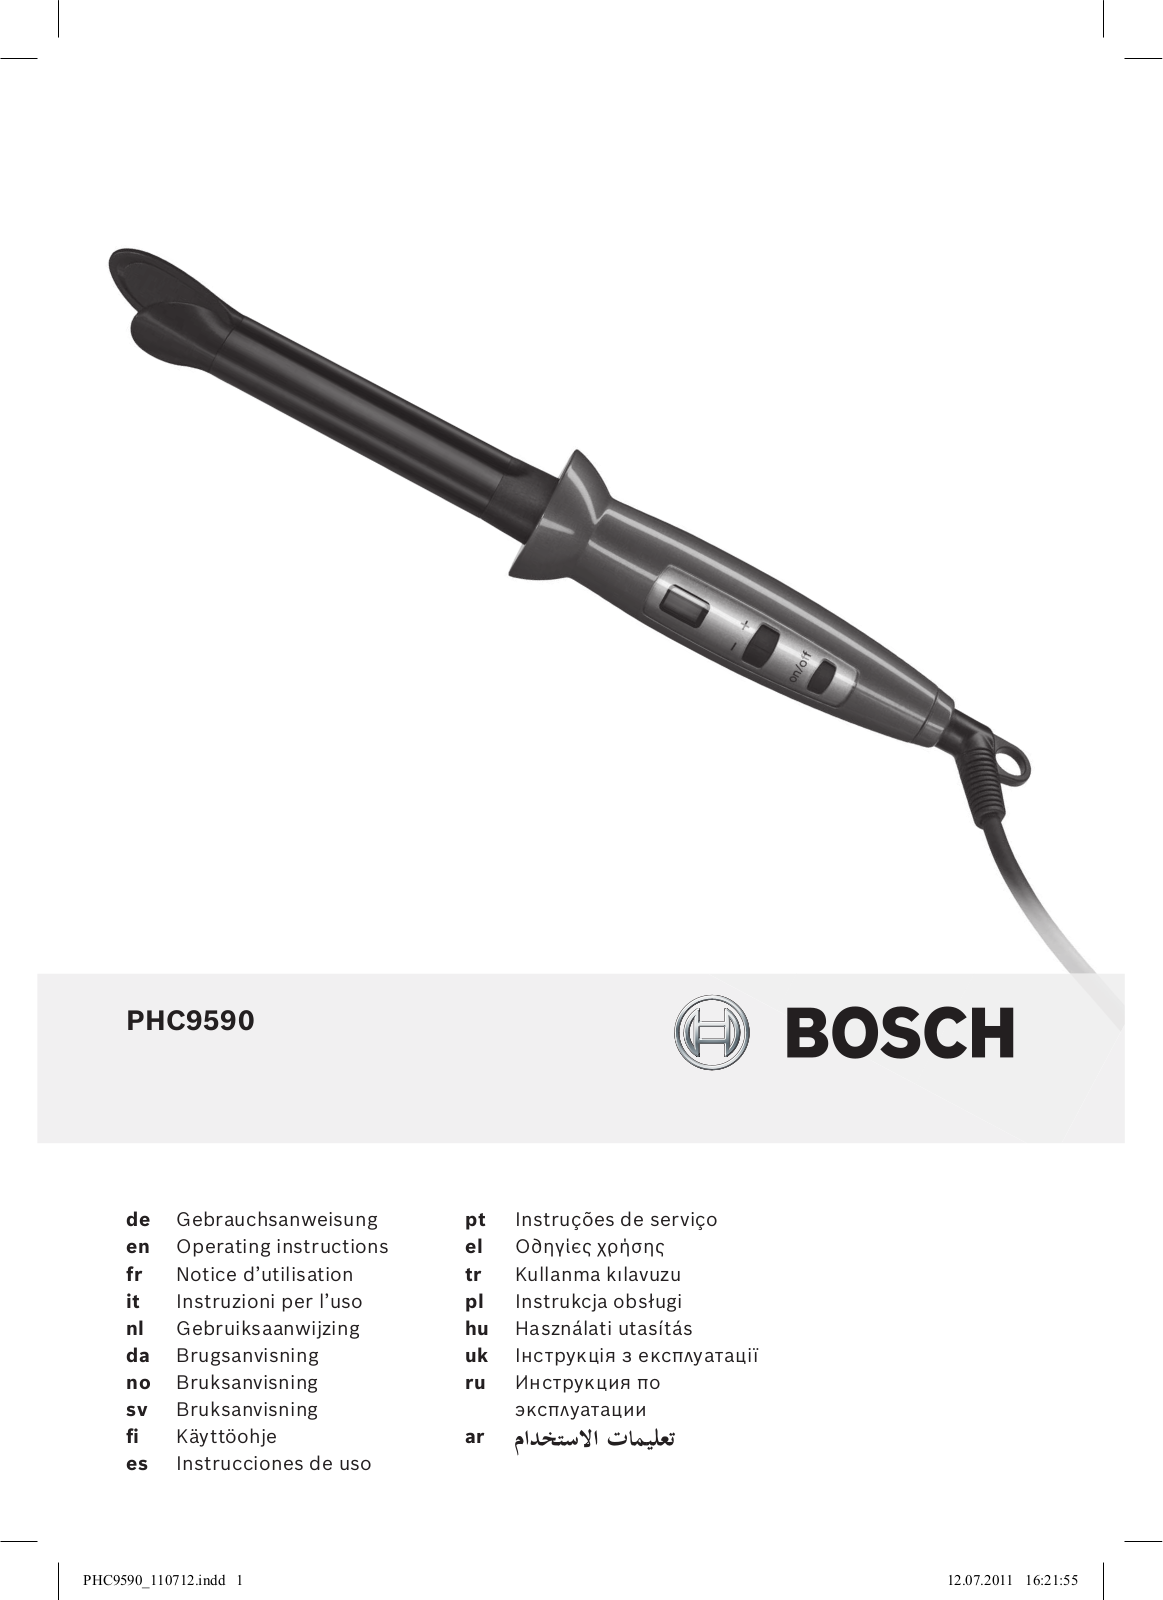 Bosch PHC9590 User Manual